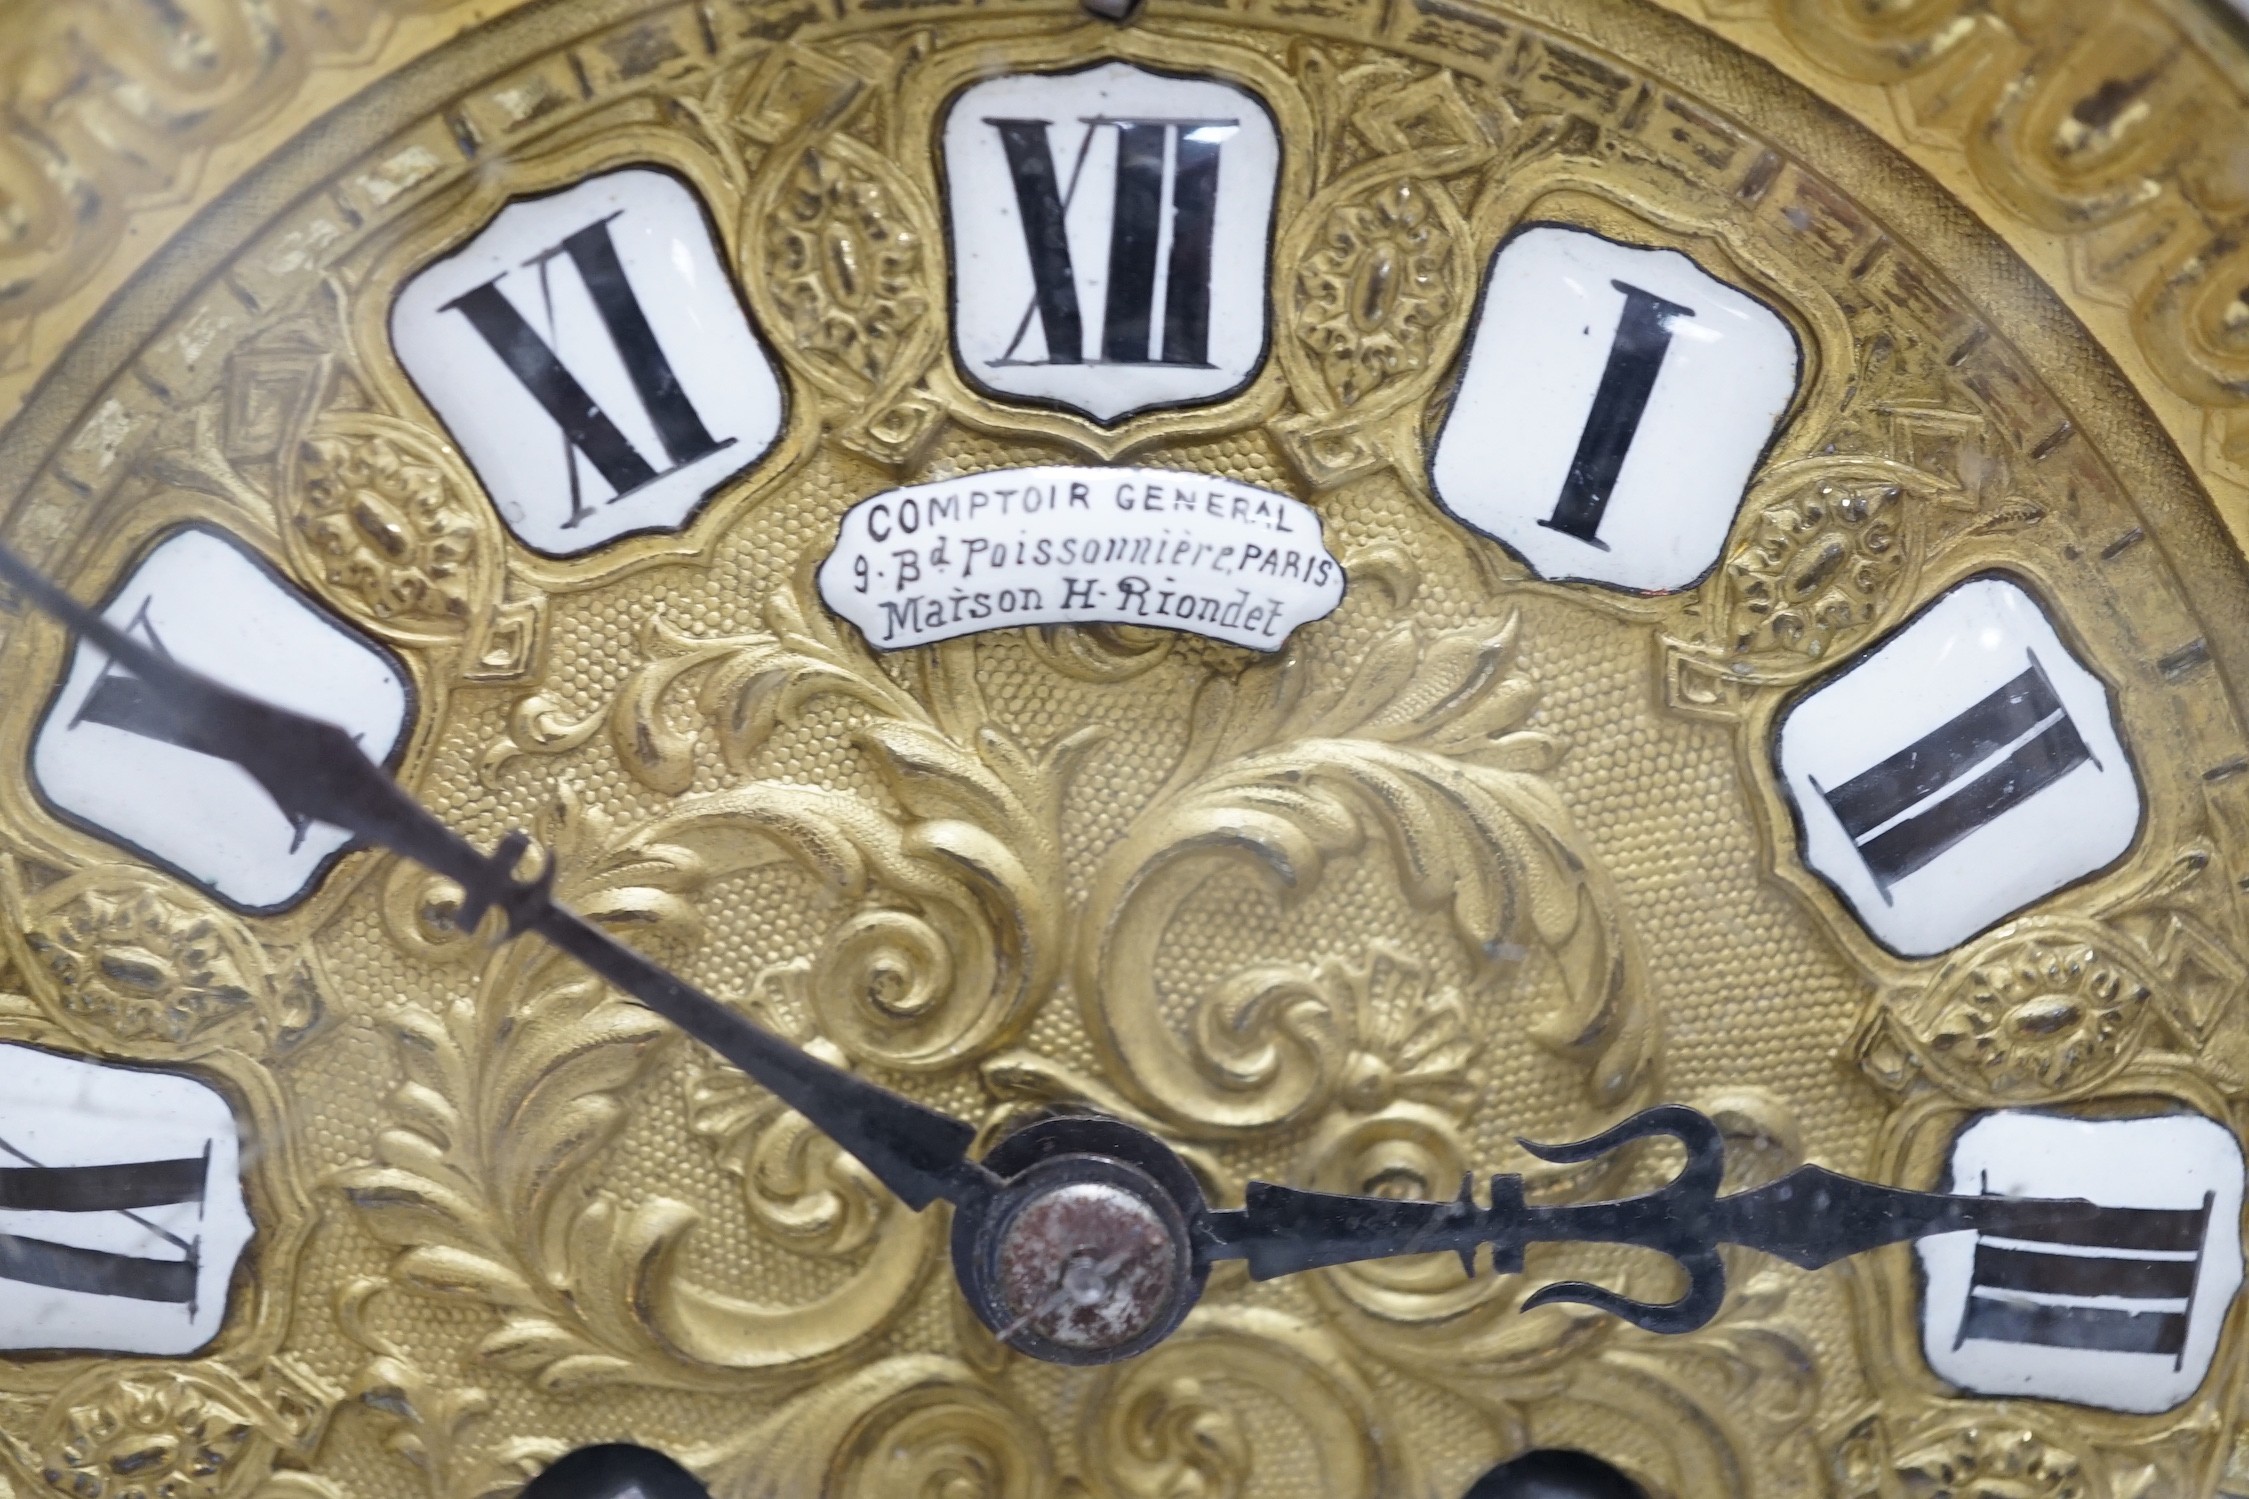 A French brass clock garniture, Comptoir General, 9 Bd Poissenniere, Paris, Matson H. Riondet on - Image 5 of 5